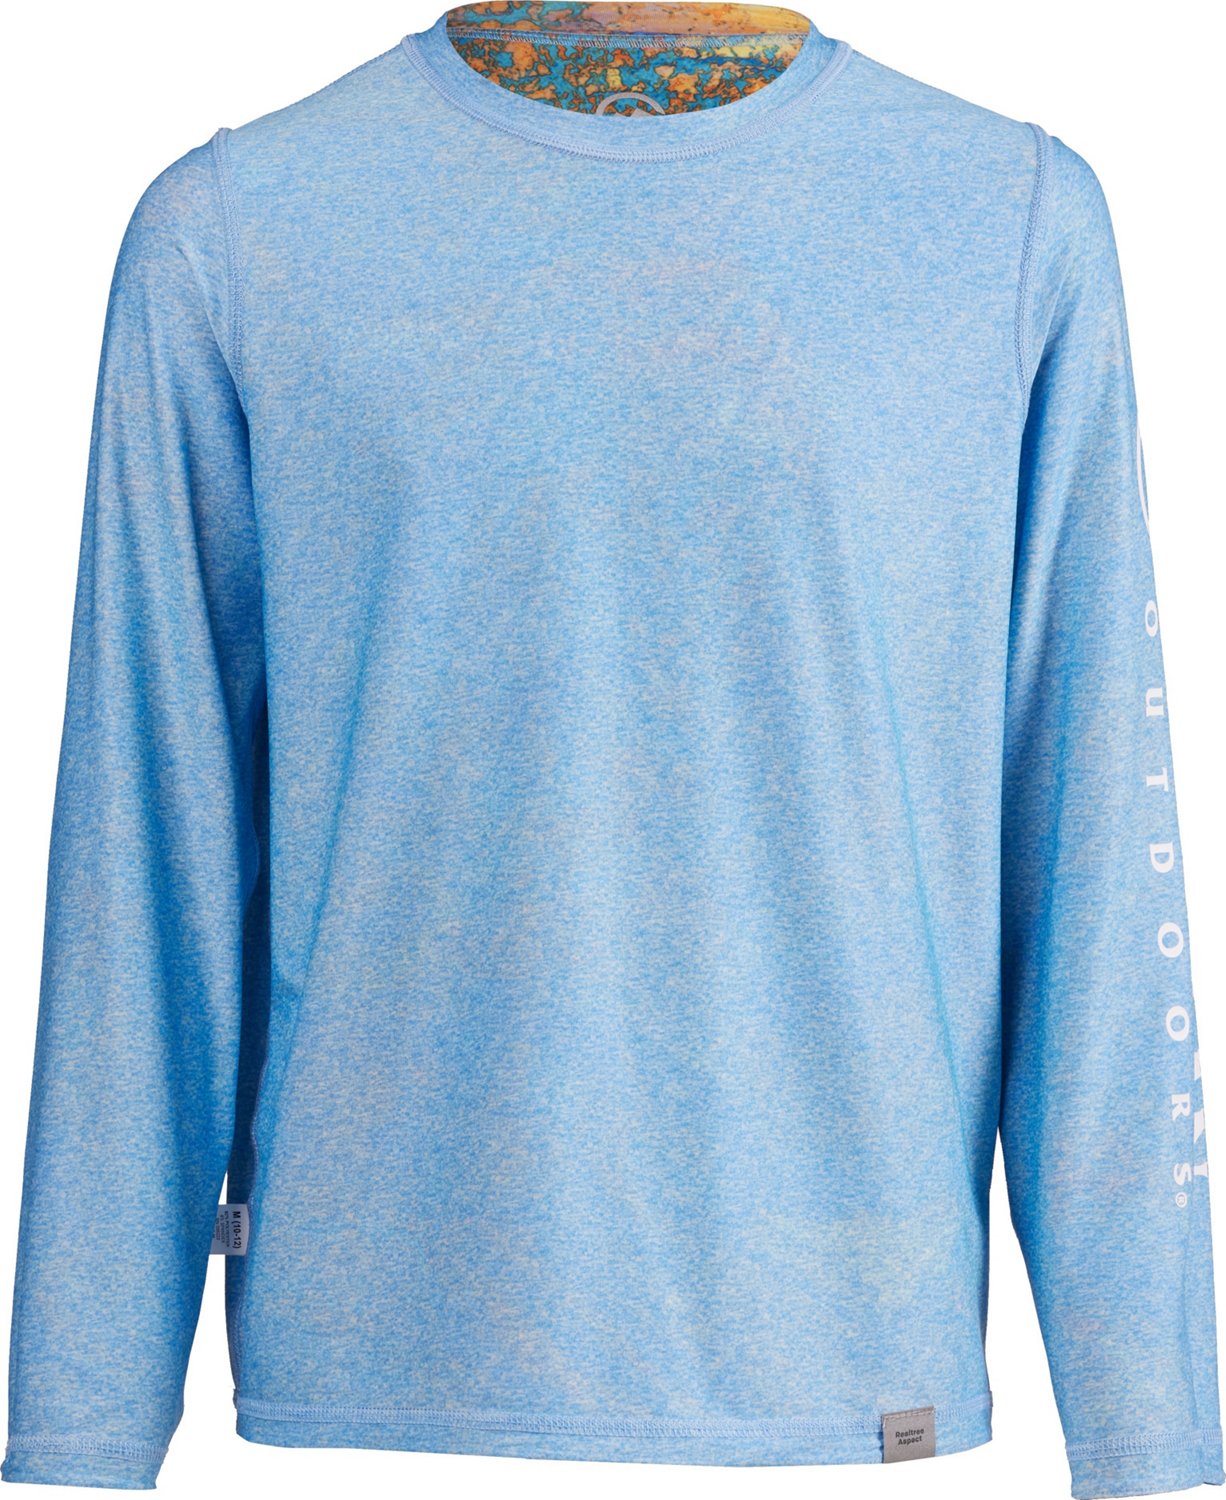 Magellan Outdoors Boy's Realtree Aspect Reversible Long Sleeve T-shirt